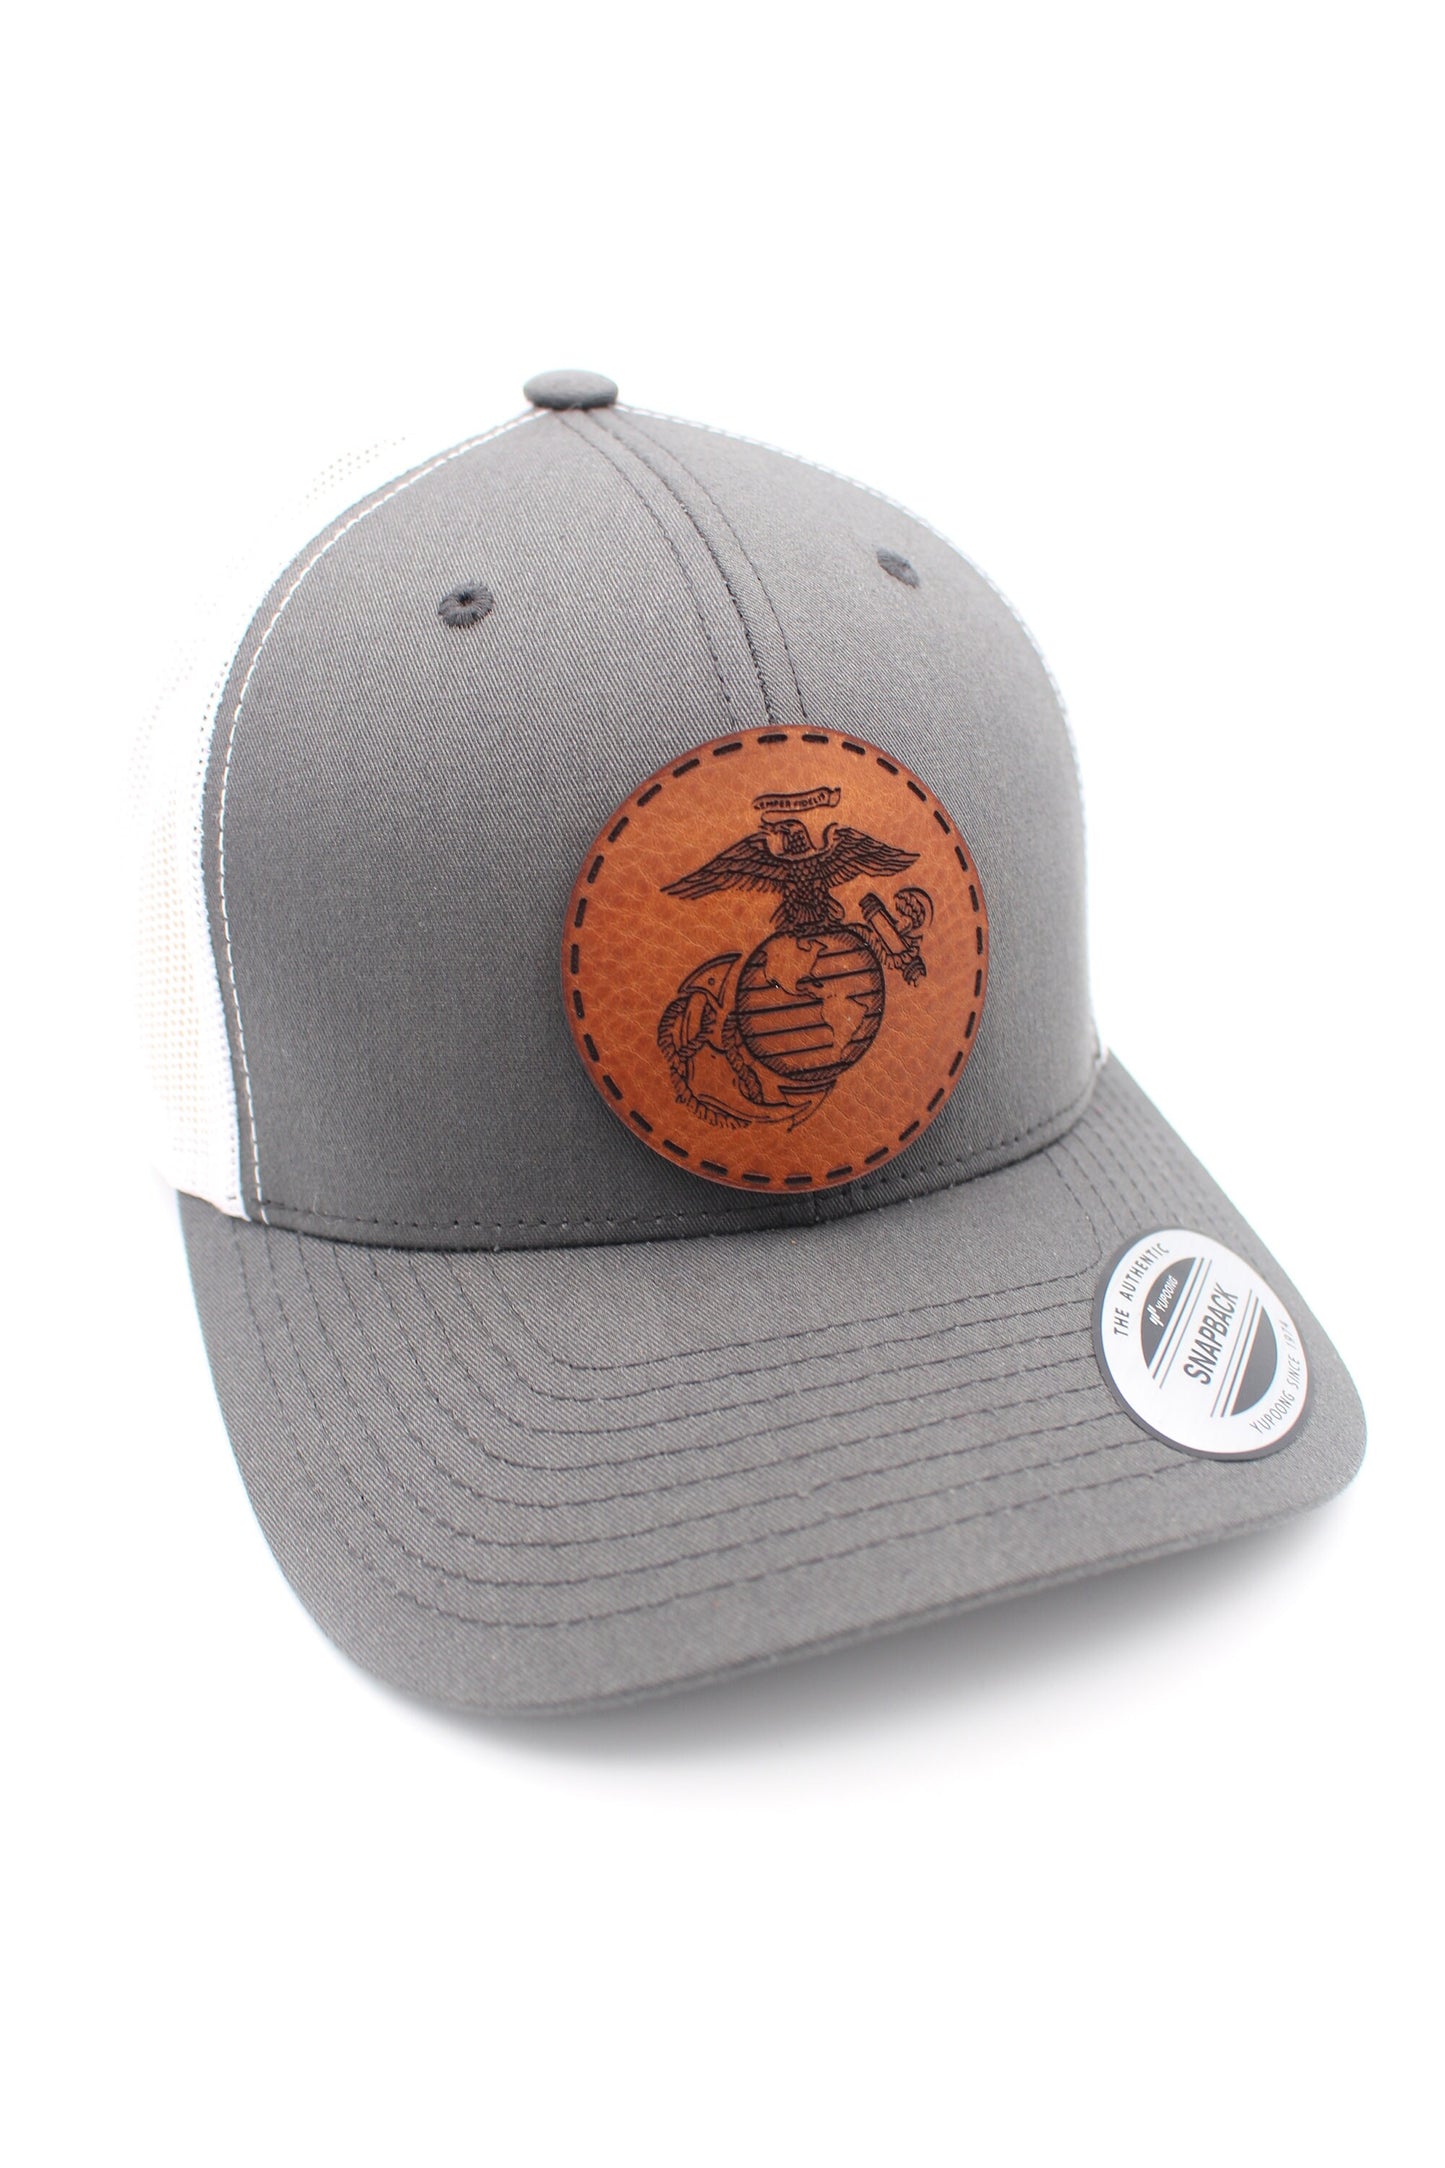 USMC Logo Hat, Marines Logo Trucker Hat, USA Trucker Hat, Military Trucker Hat